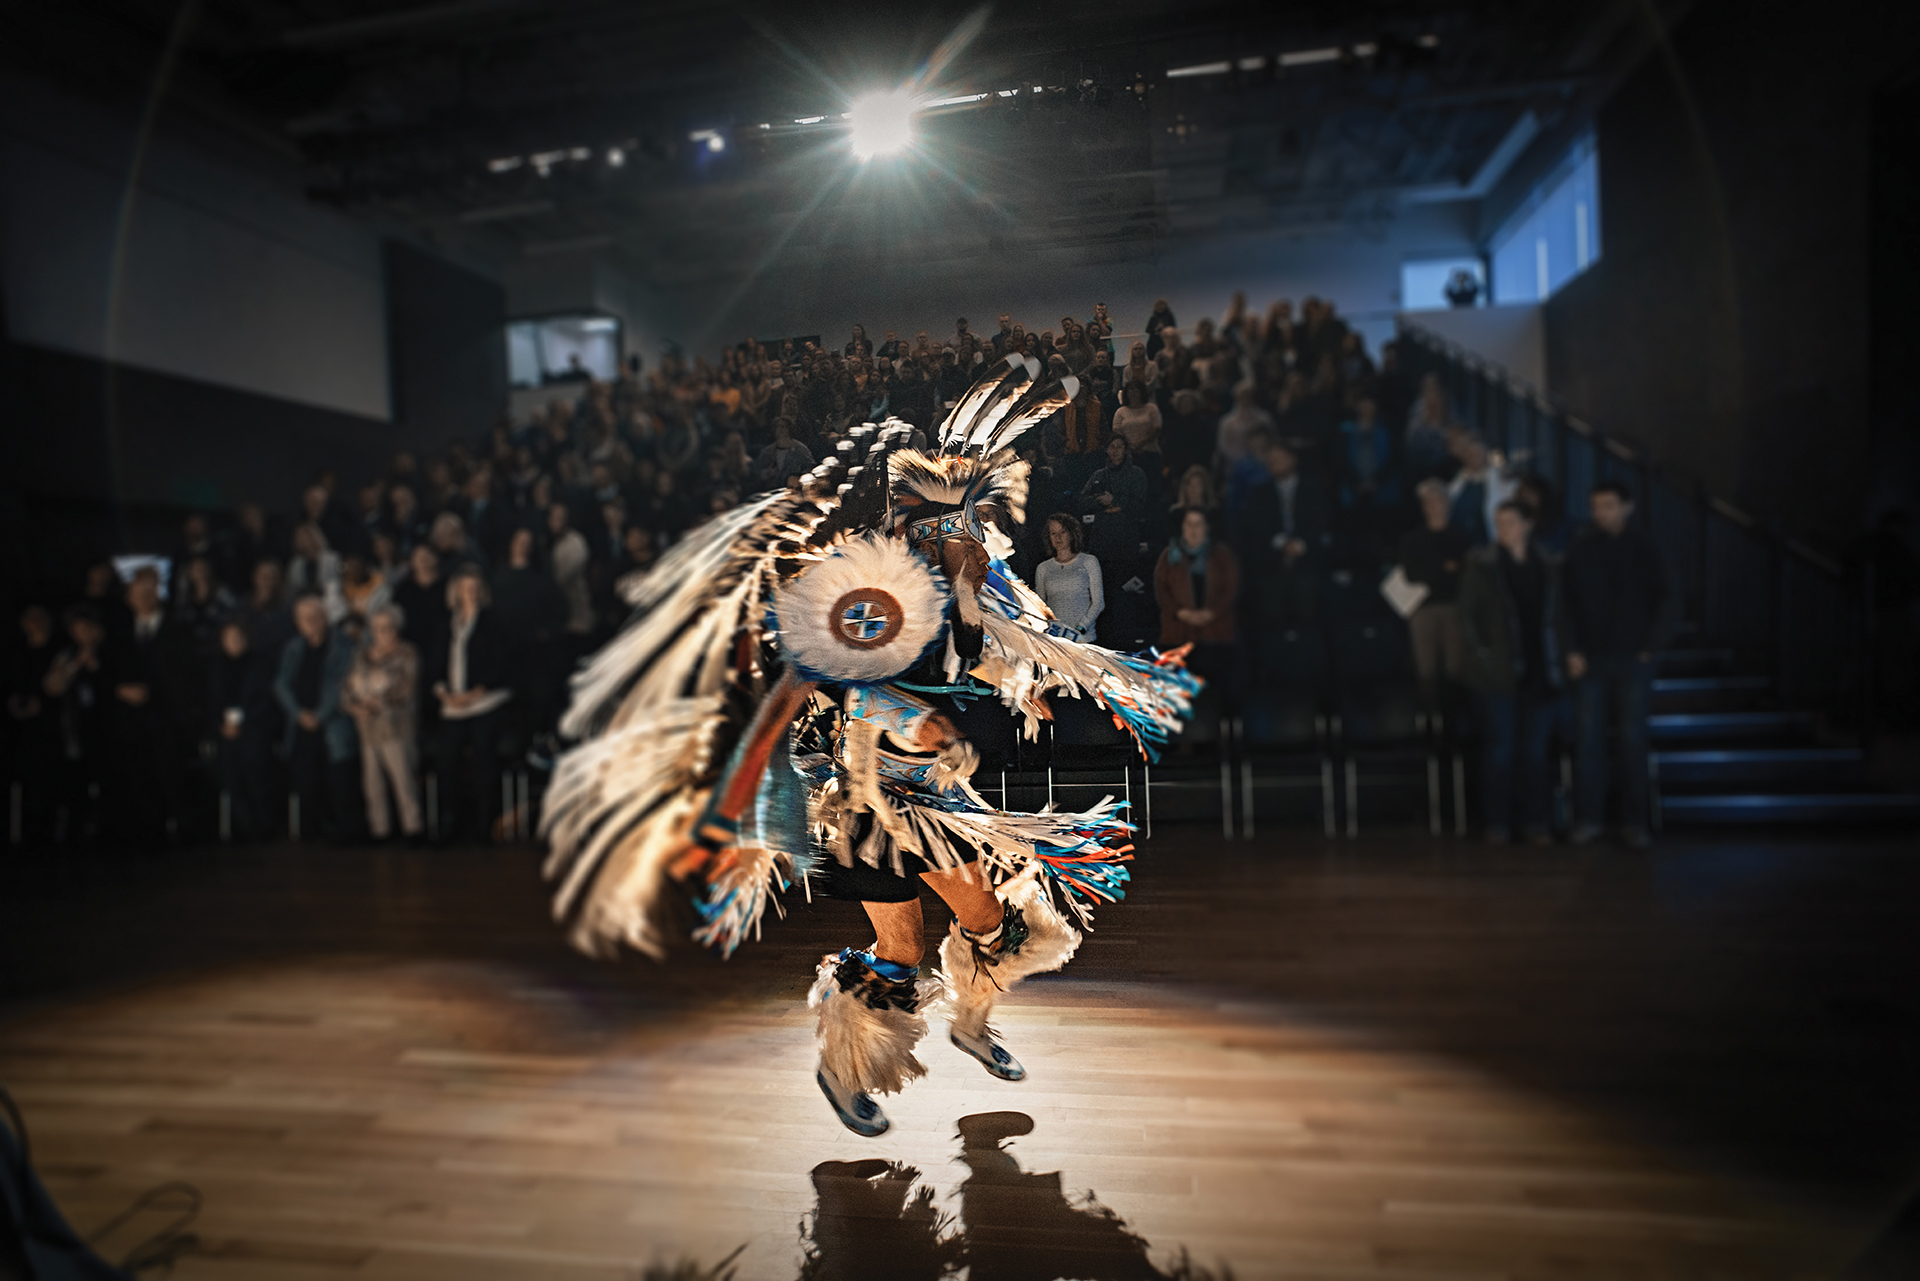 Native american in full powwow dance costume